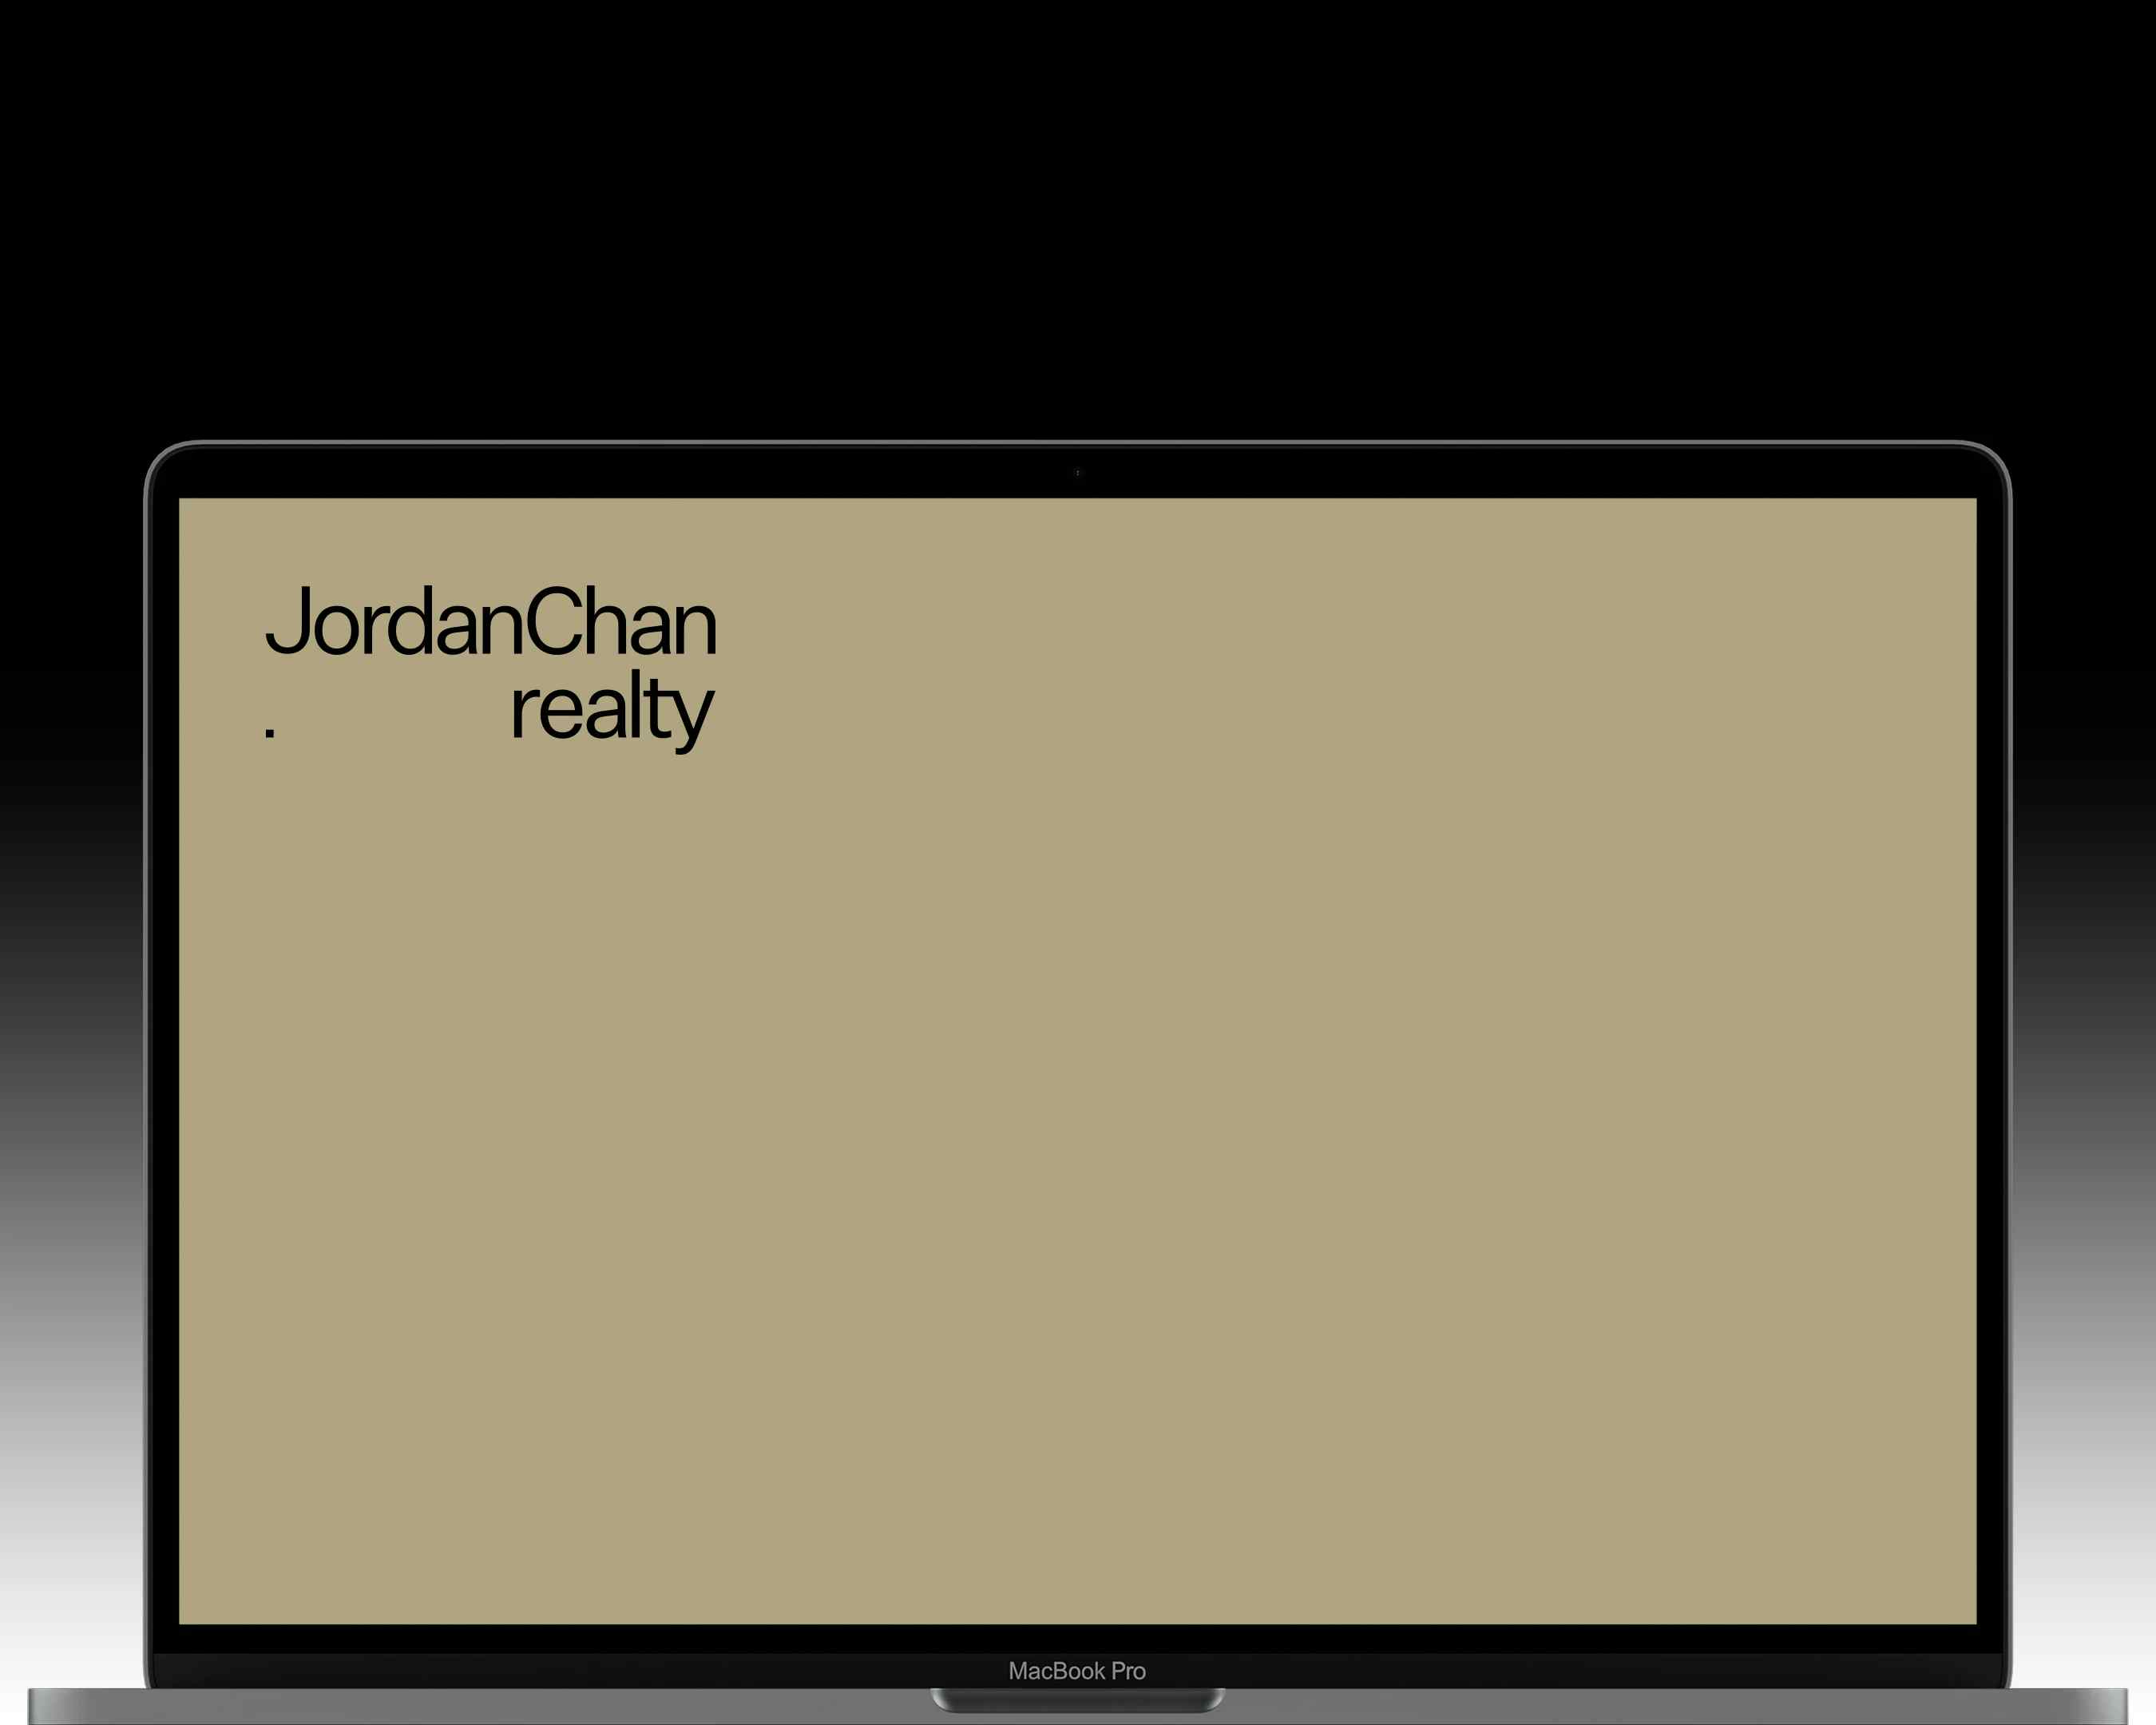 Jordan Chan Identity Design & More Visual Identity System